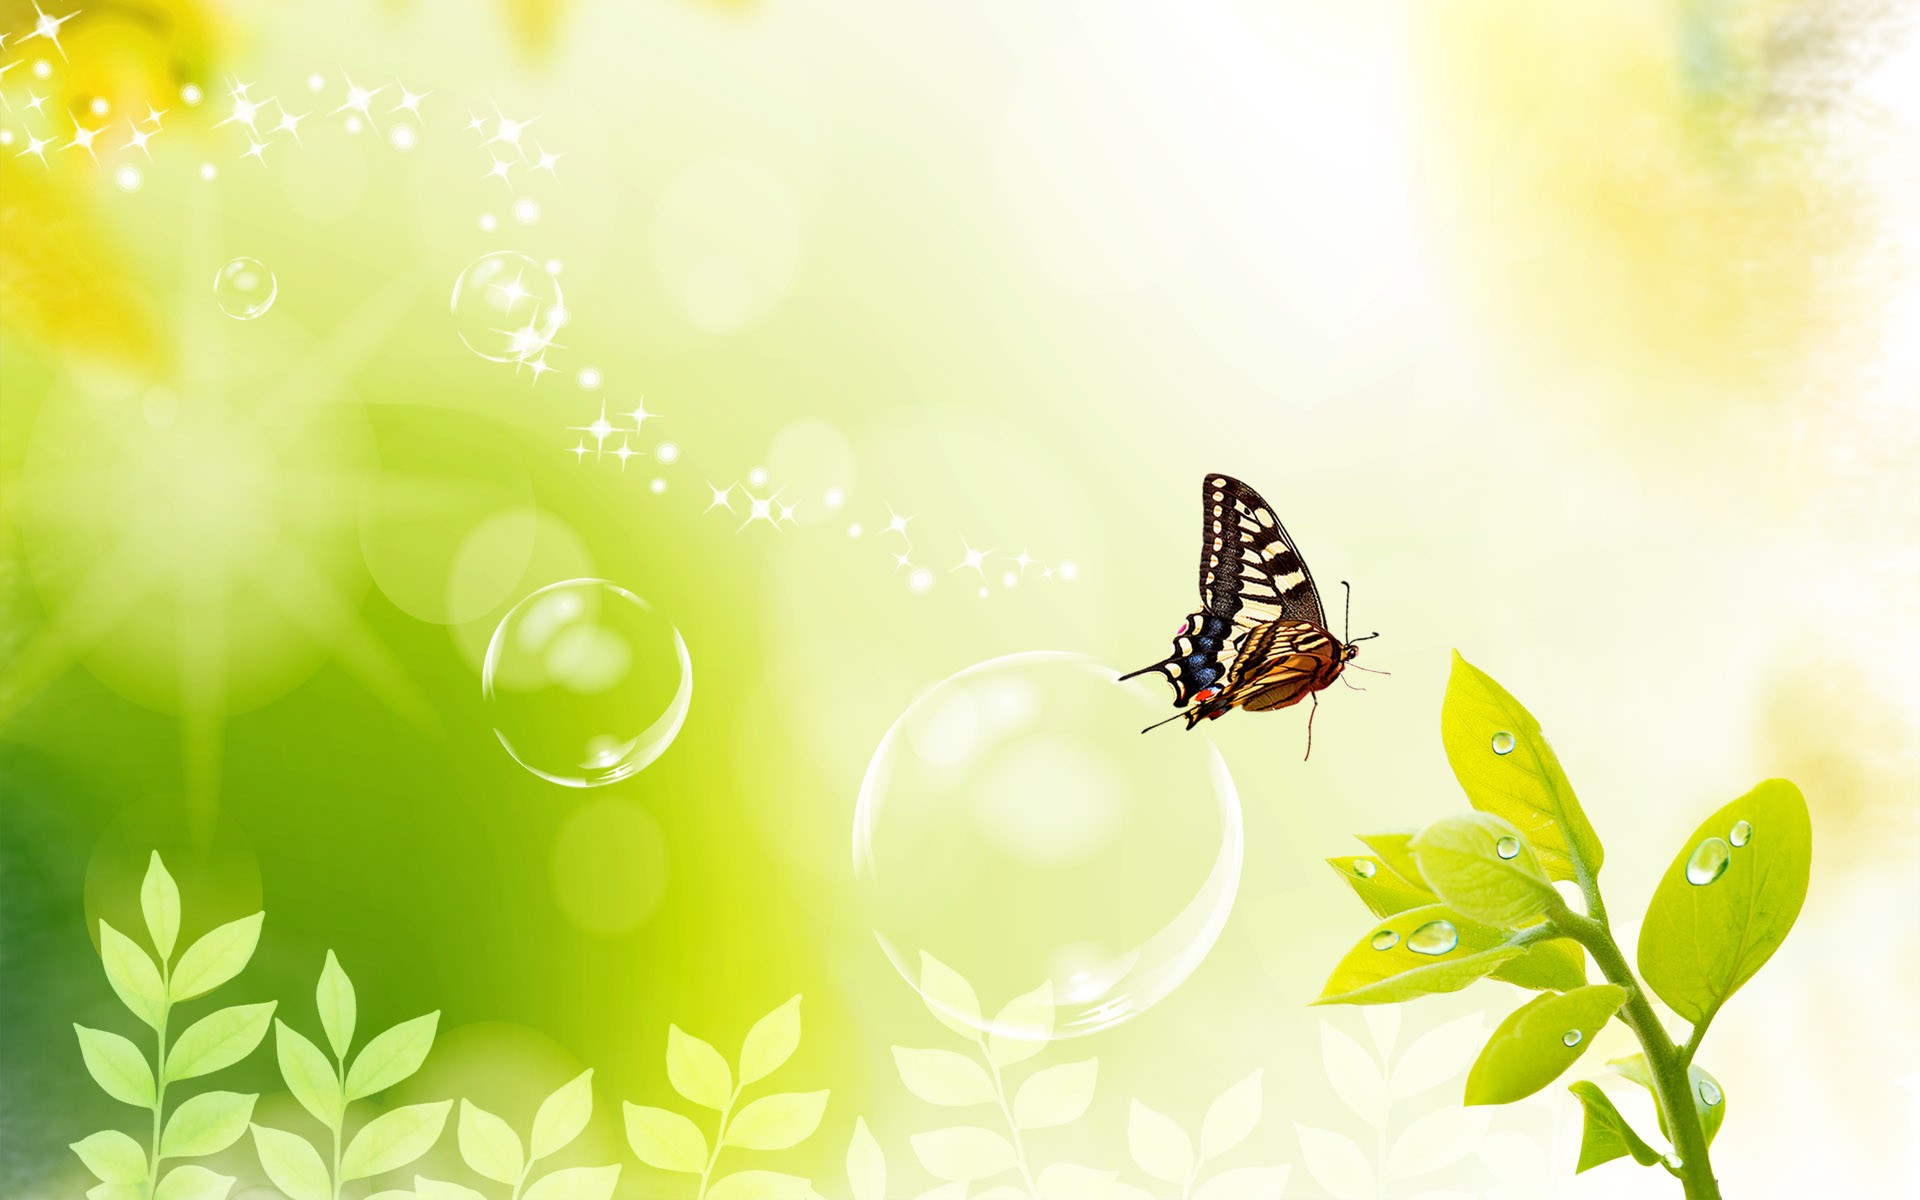 plants, bubbles, digital art, butterflies - desktop wallpaper